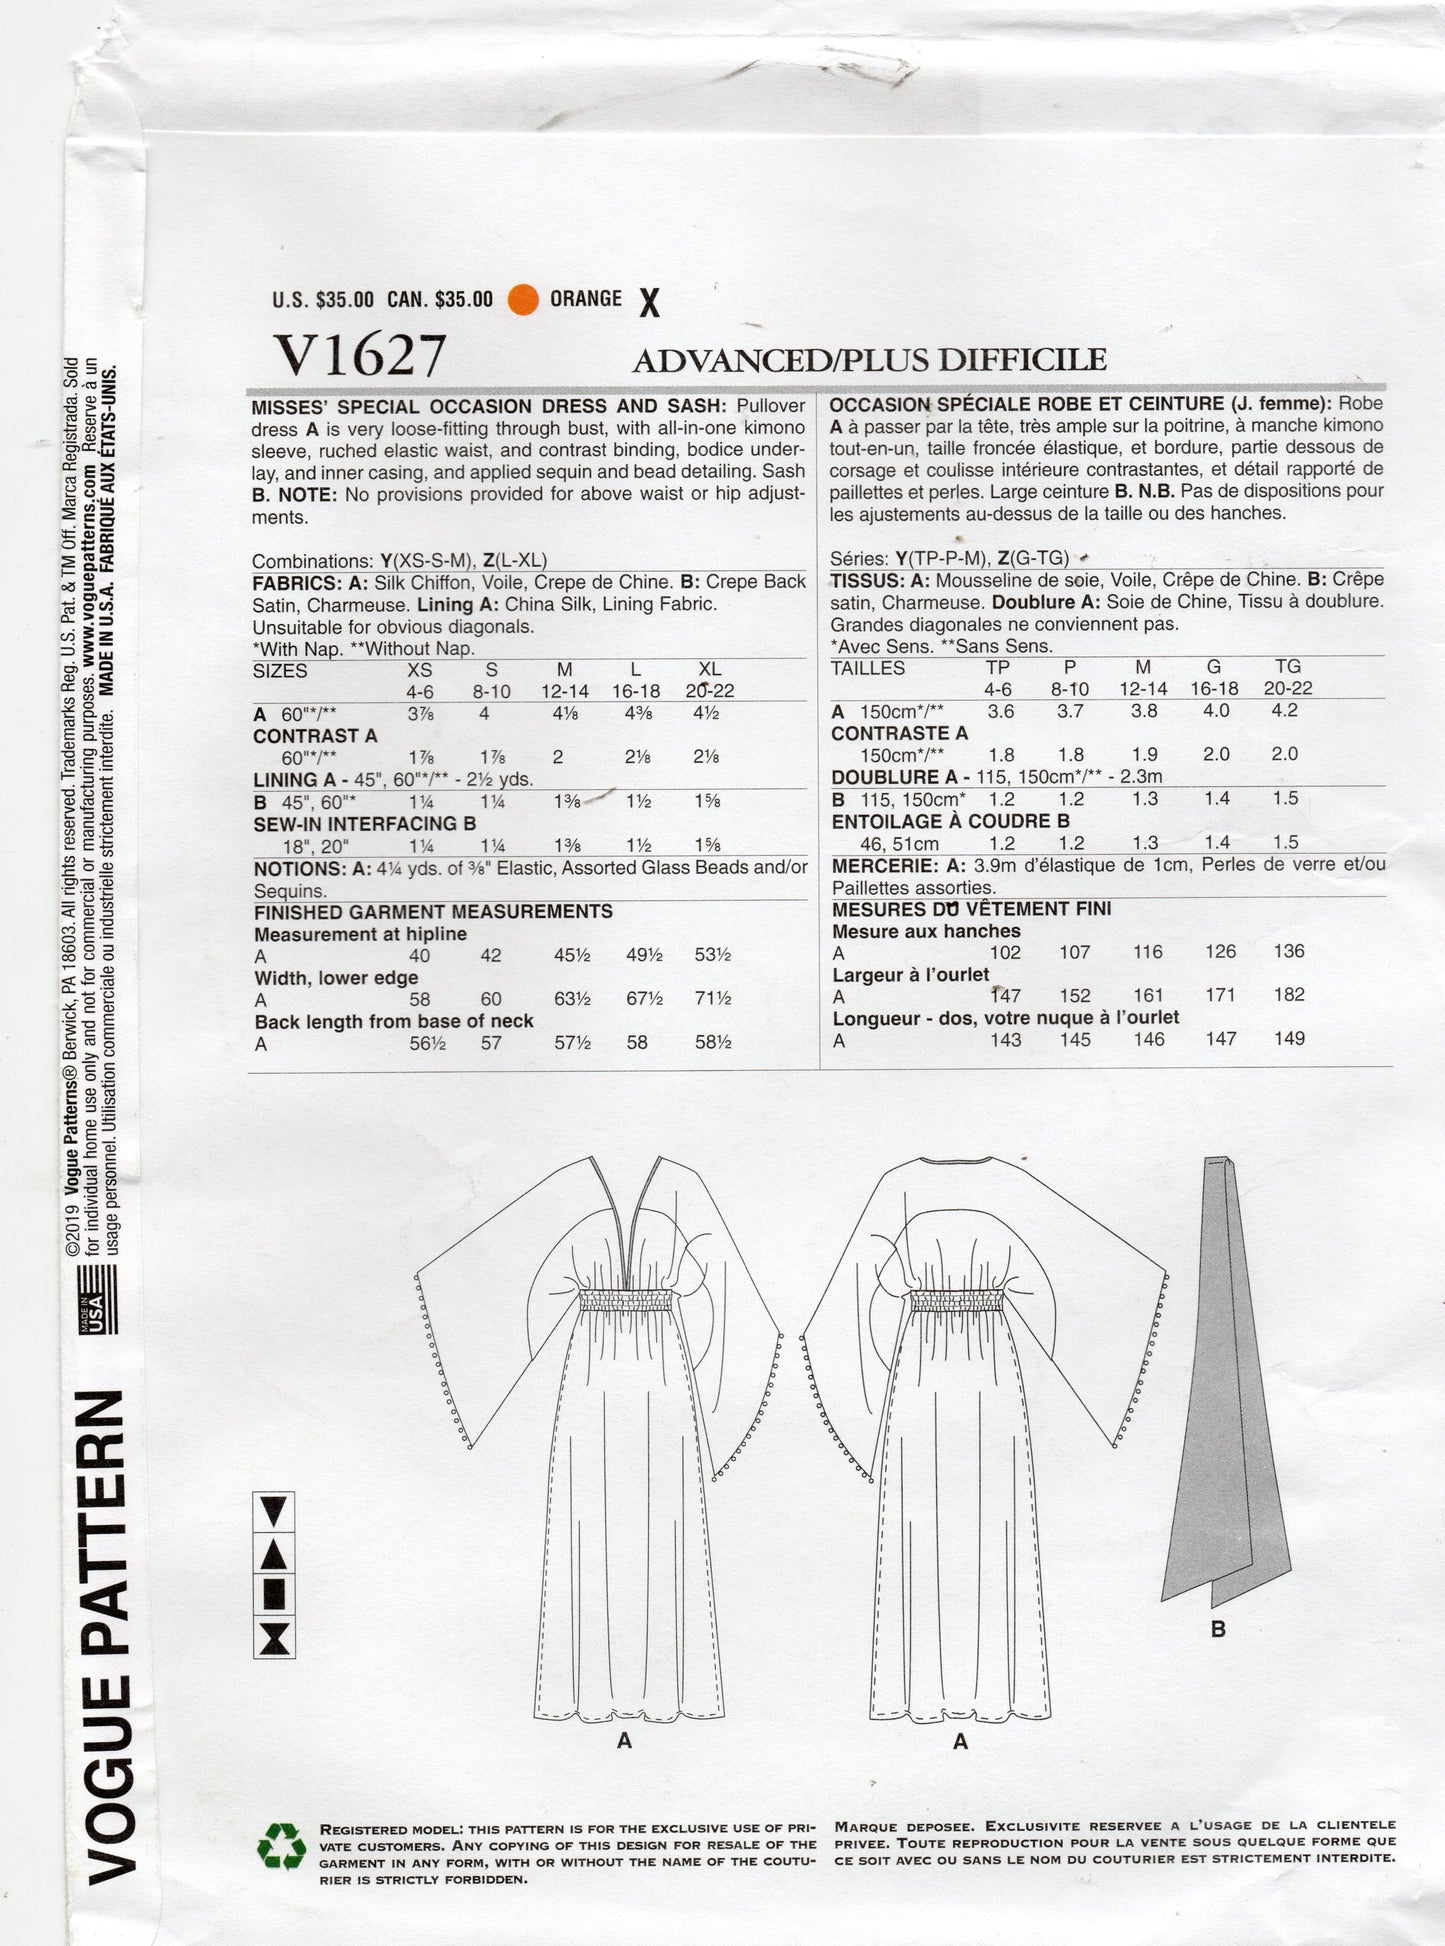 Vogue American Designer V1627 ZANDRA RHODES Womens Evening Kimono Dress & Sash Sewing Pattern Sizes XS-M or L-XL UNCUT Factory Folded